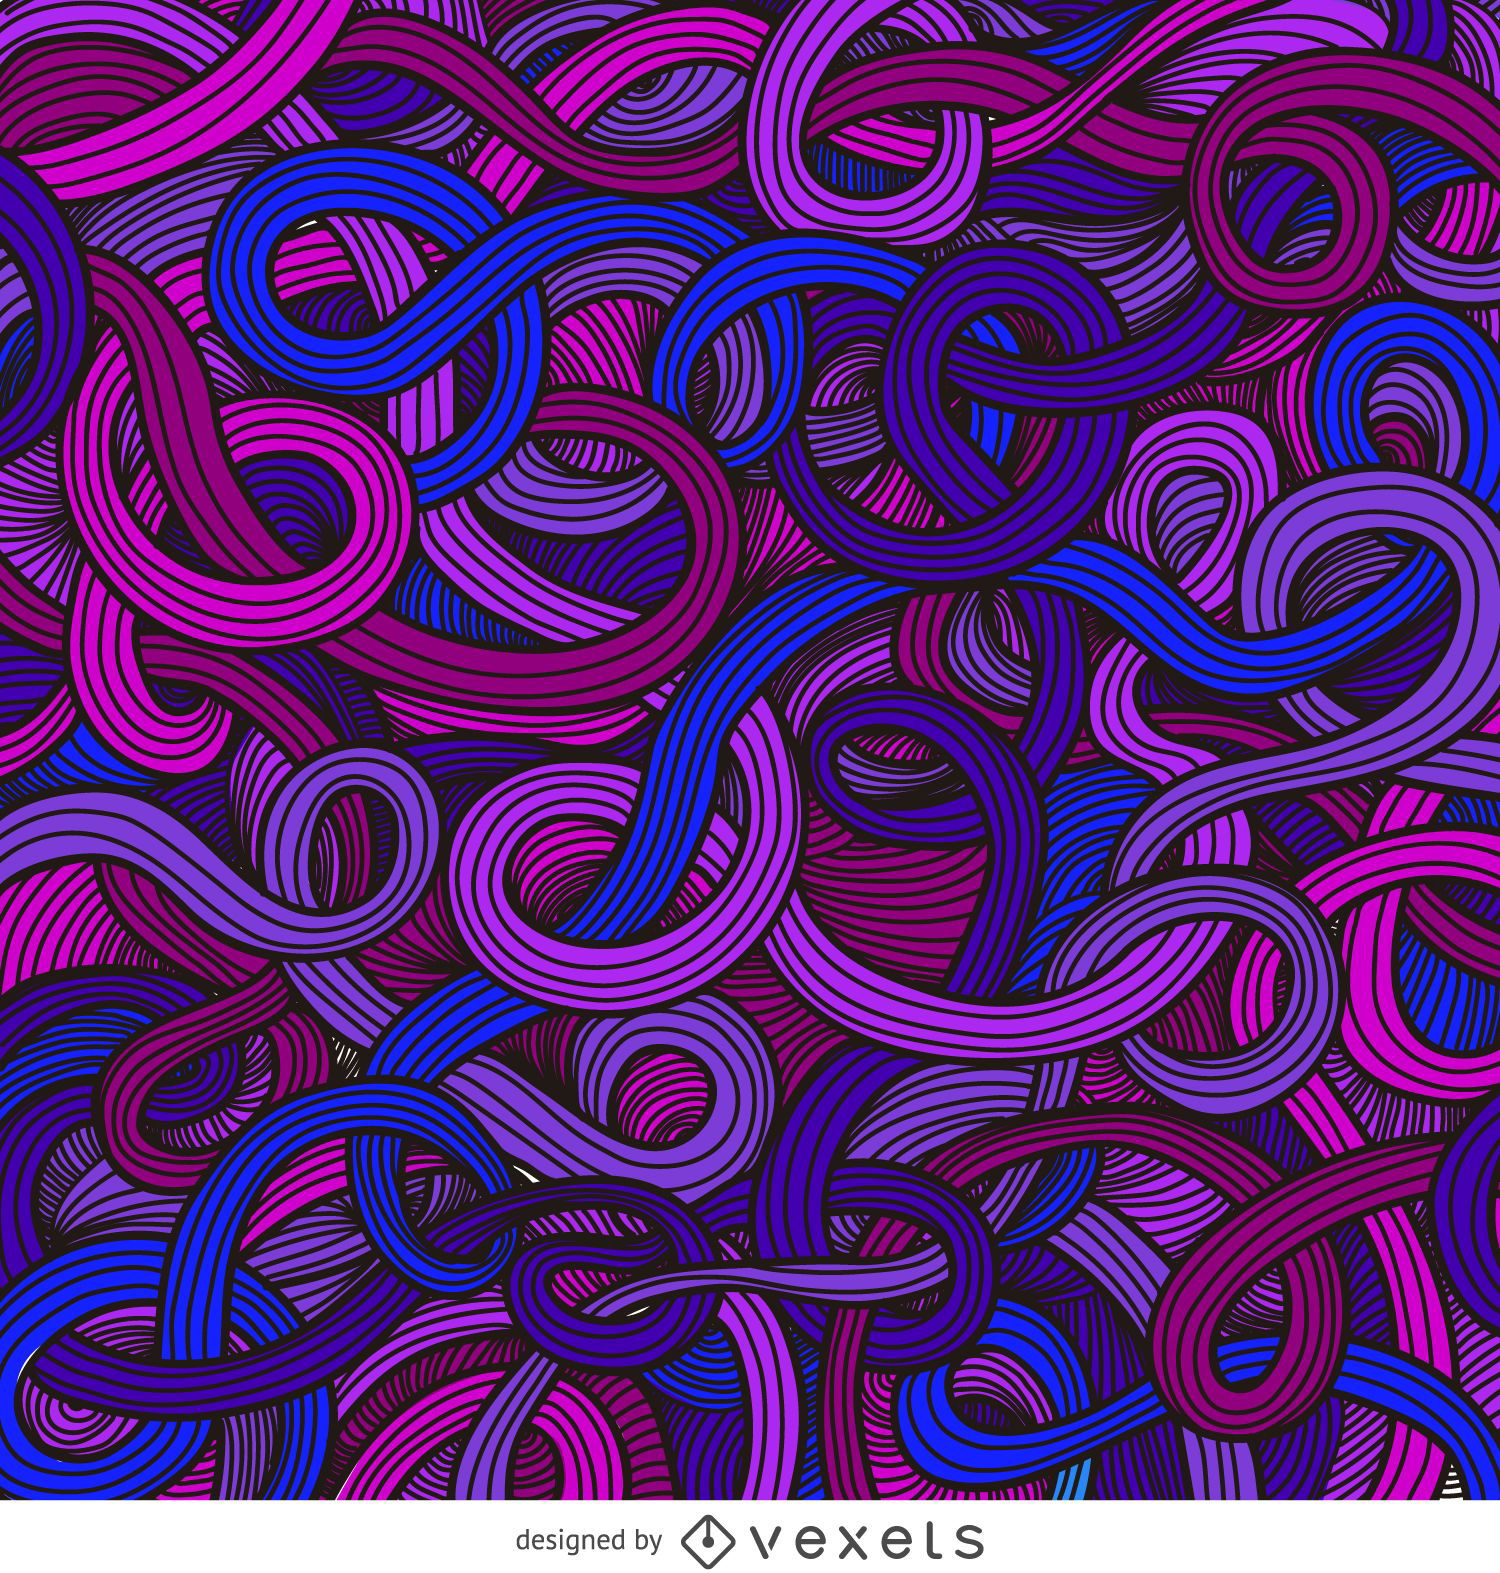 Purple curly swirls background